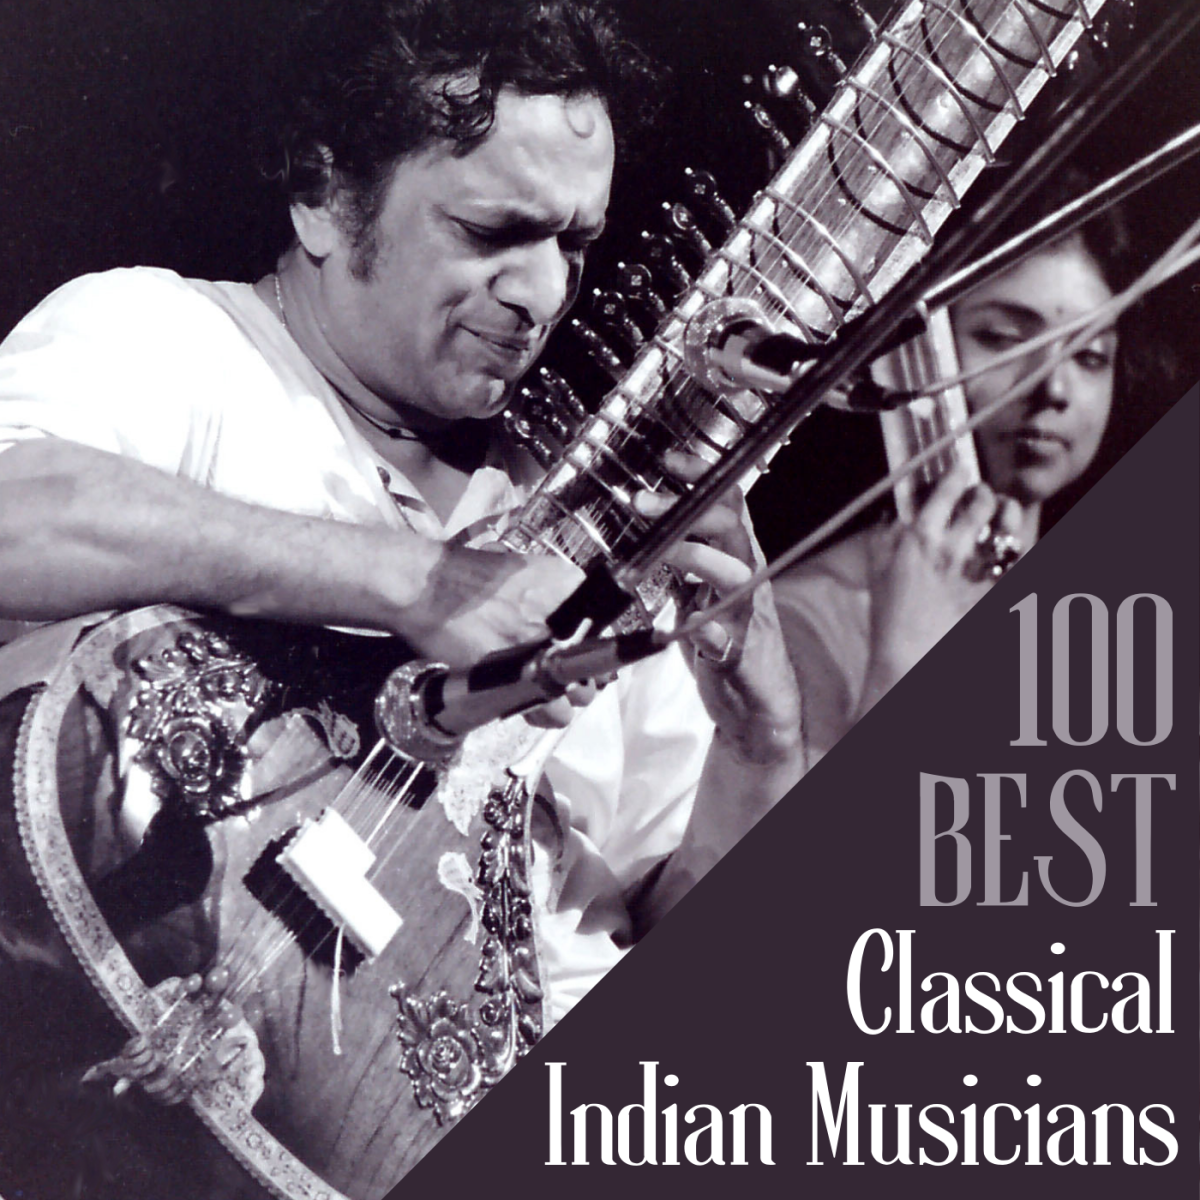 Explore the 100 best classical Indian musicians, like Ravi Shankar!